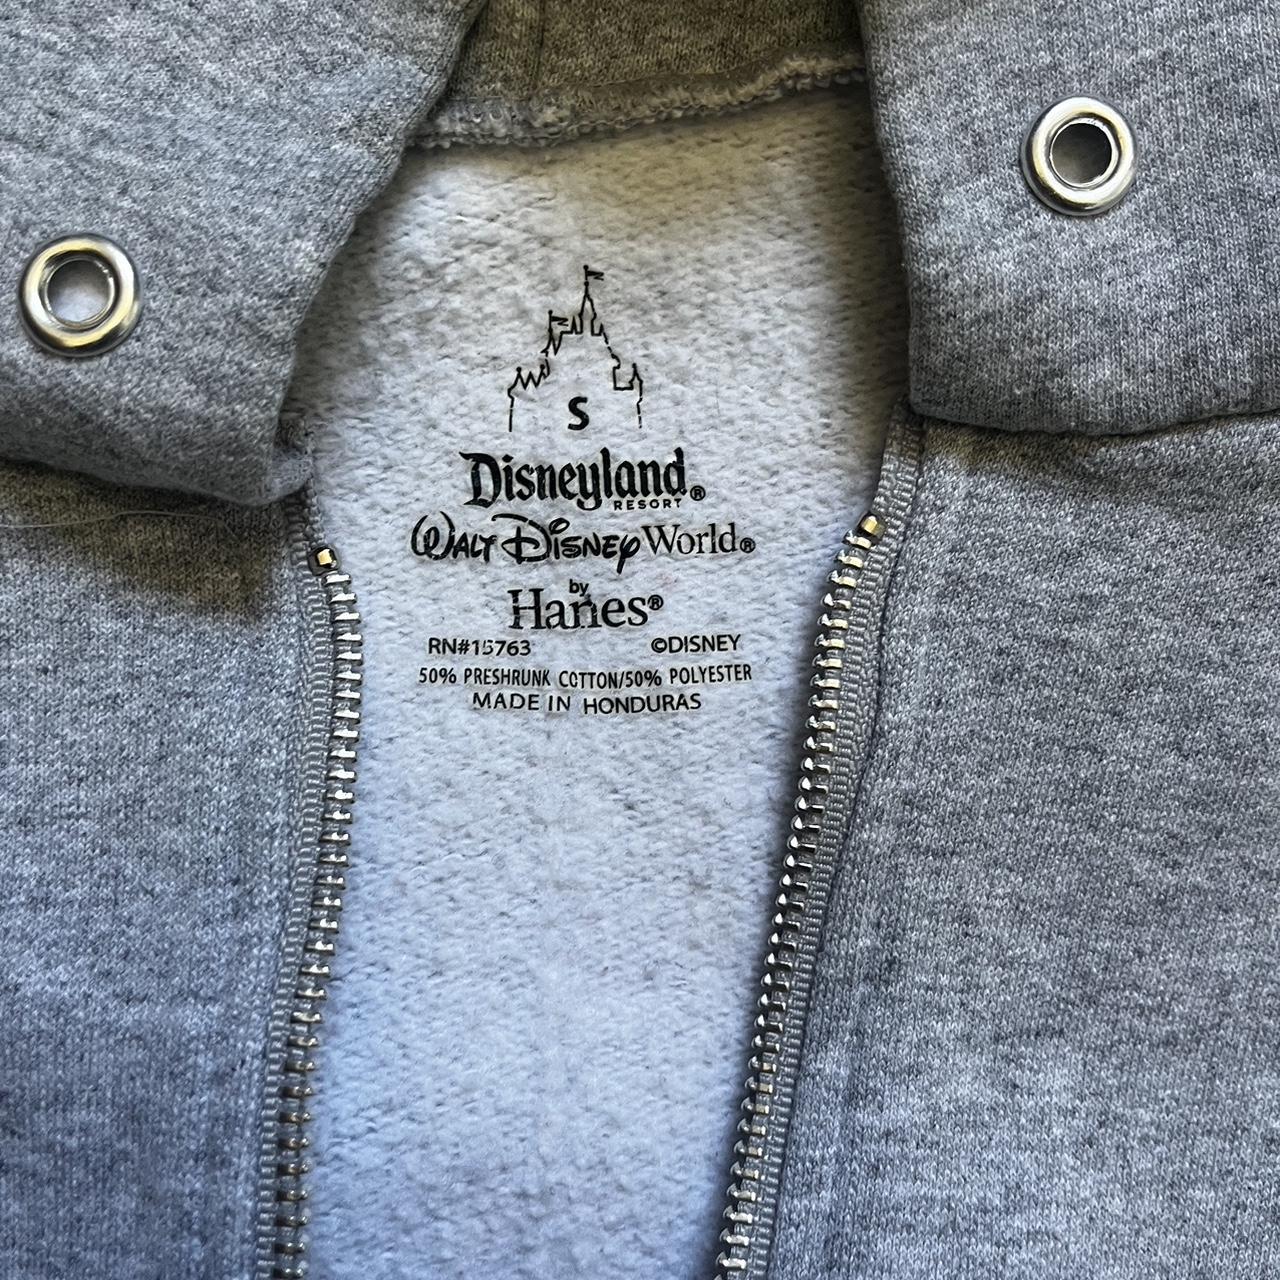 Walt Disney World Grey crew neck Tee Shirt by Hanes RN#15763 Size S